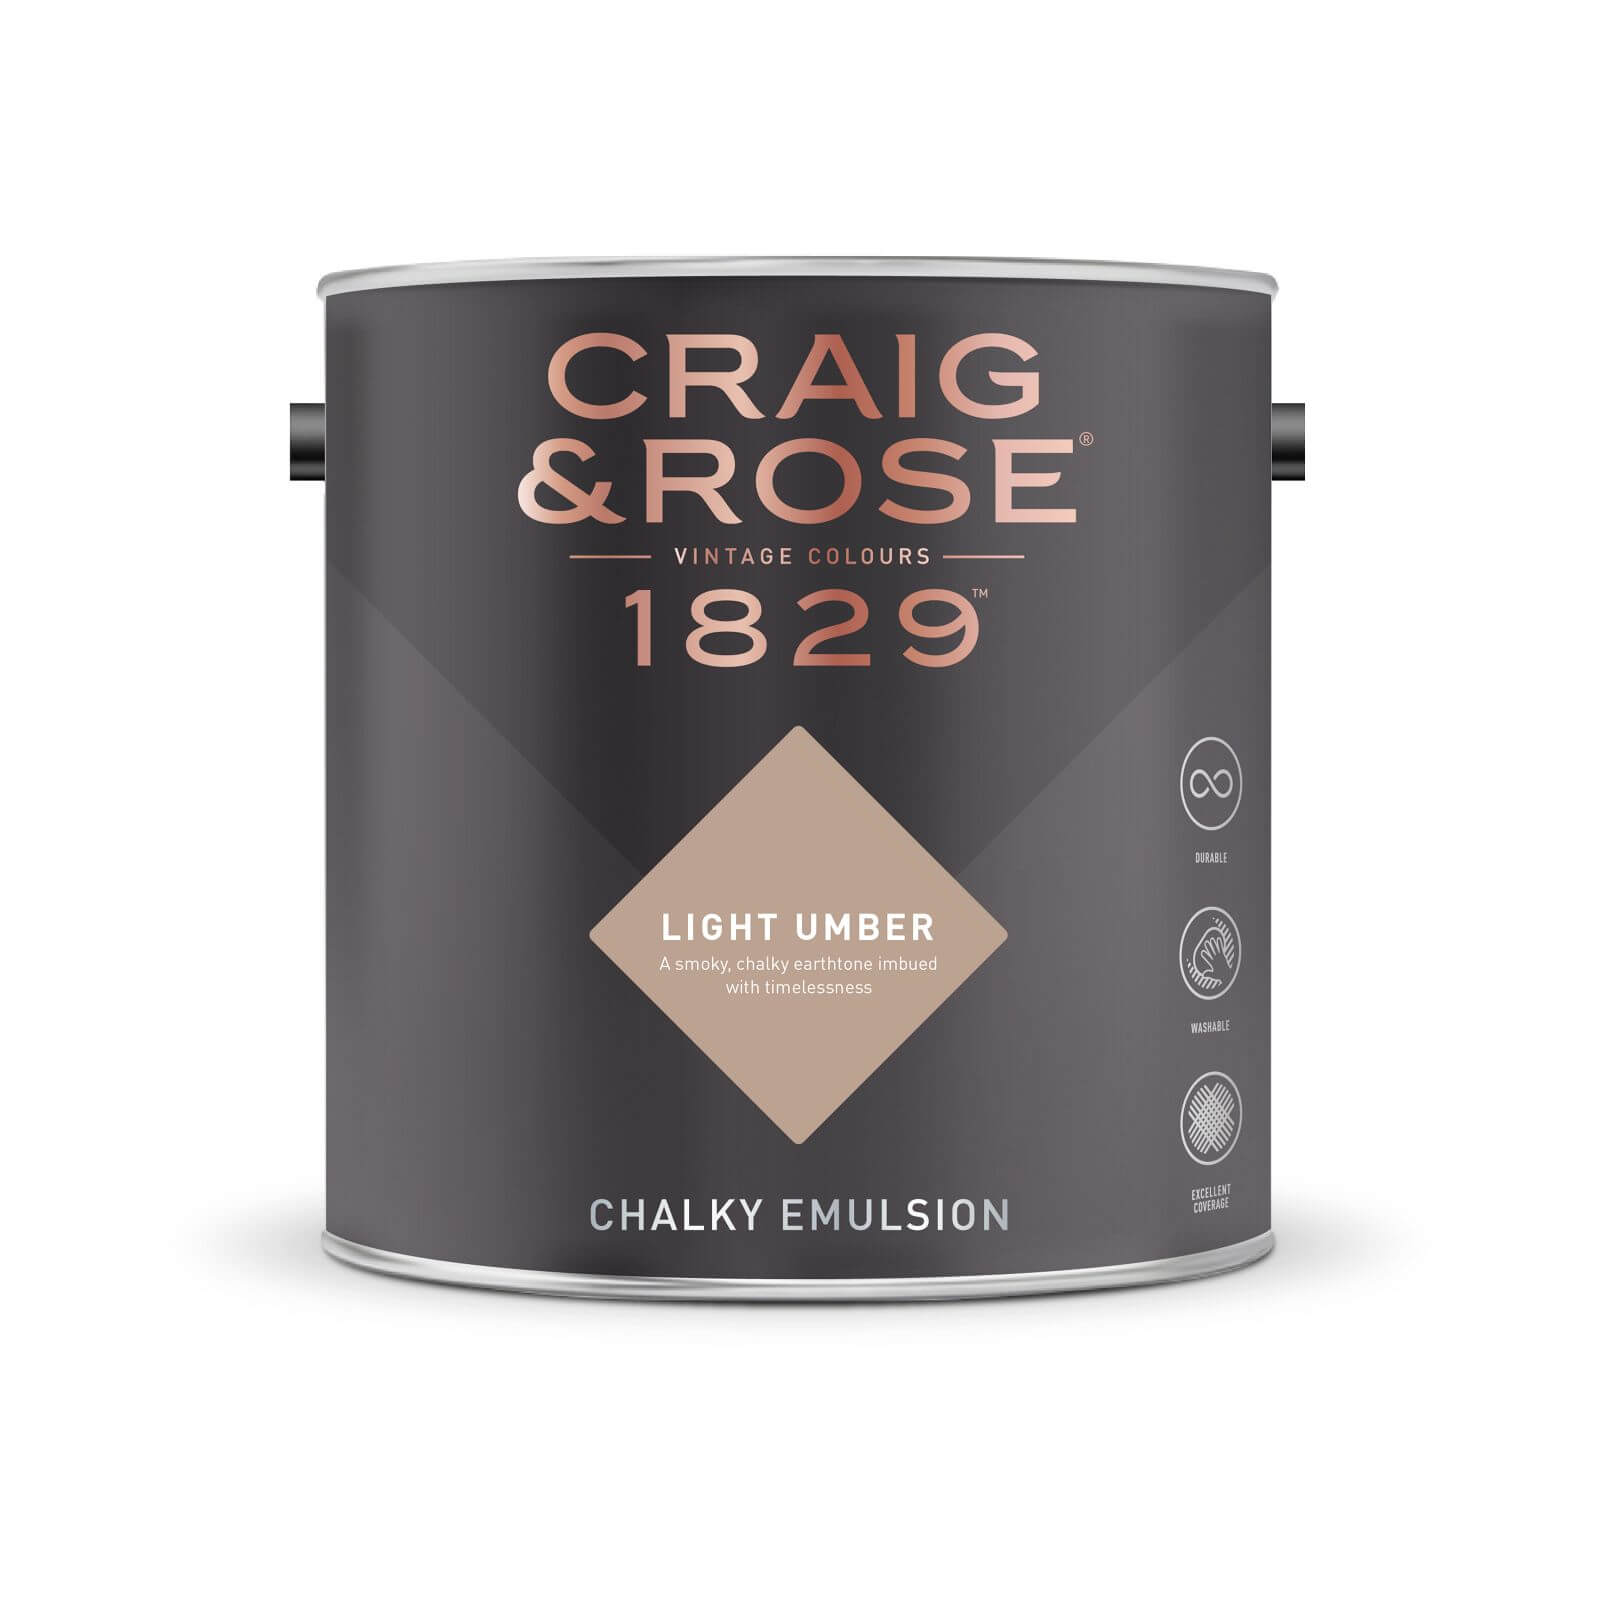 Craig & Rose 1829 Chalky Emulsion Paint Light Umber - 5L